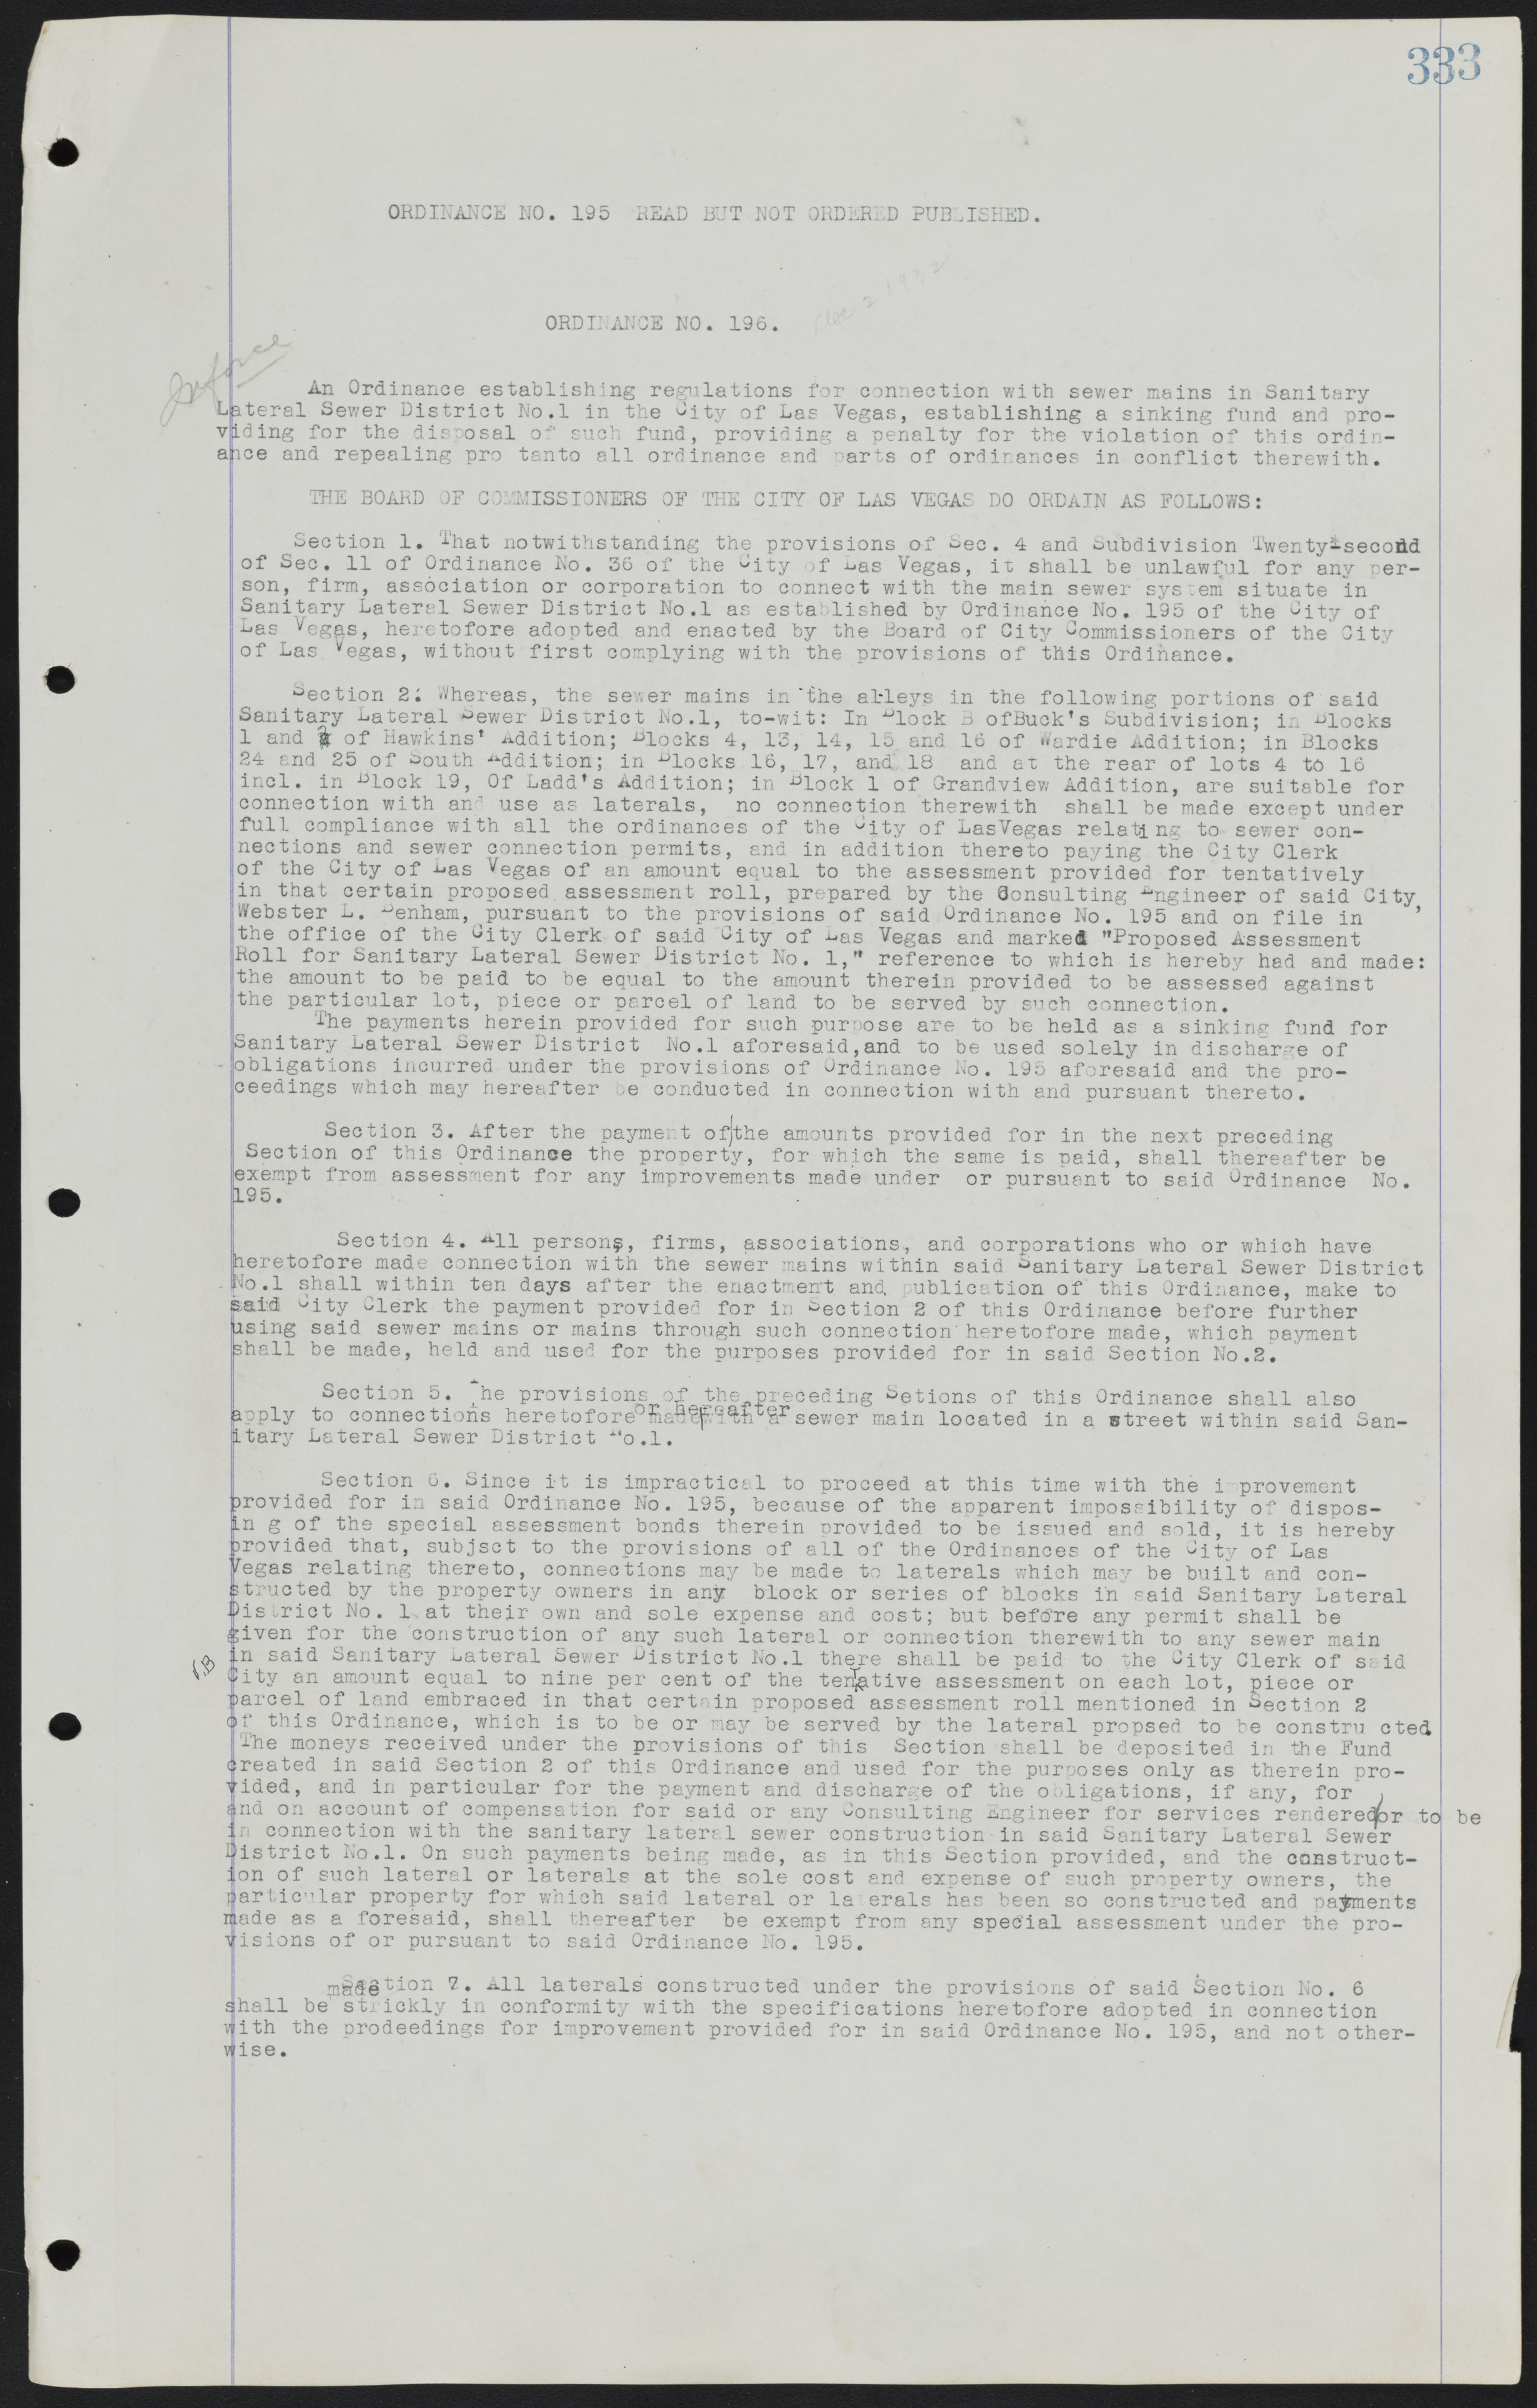 Las Vegas City Ordinances, July 18, 1911 to March 31, 1933, lvc000013-337